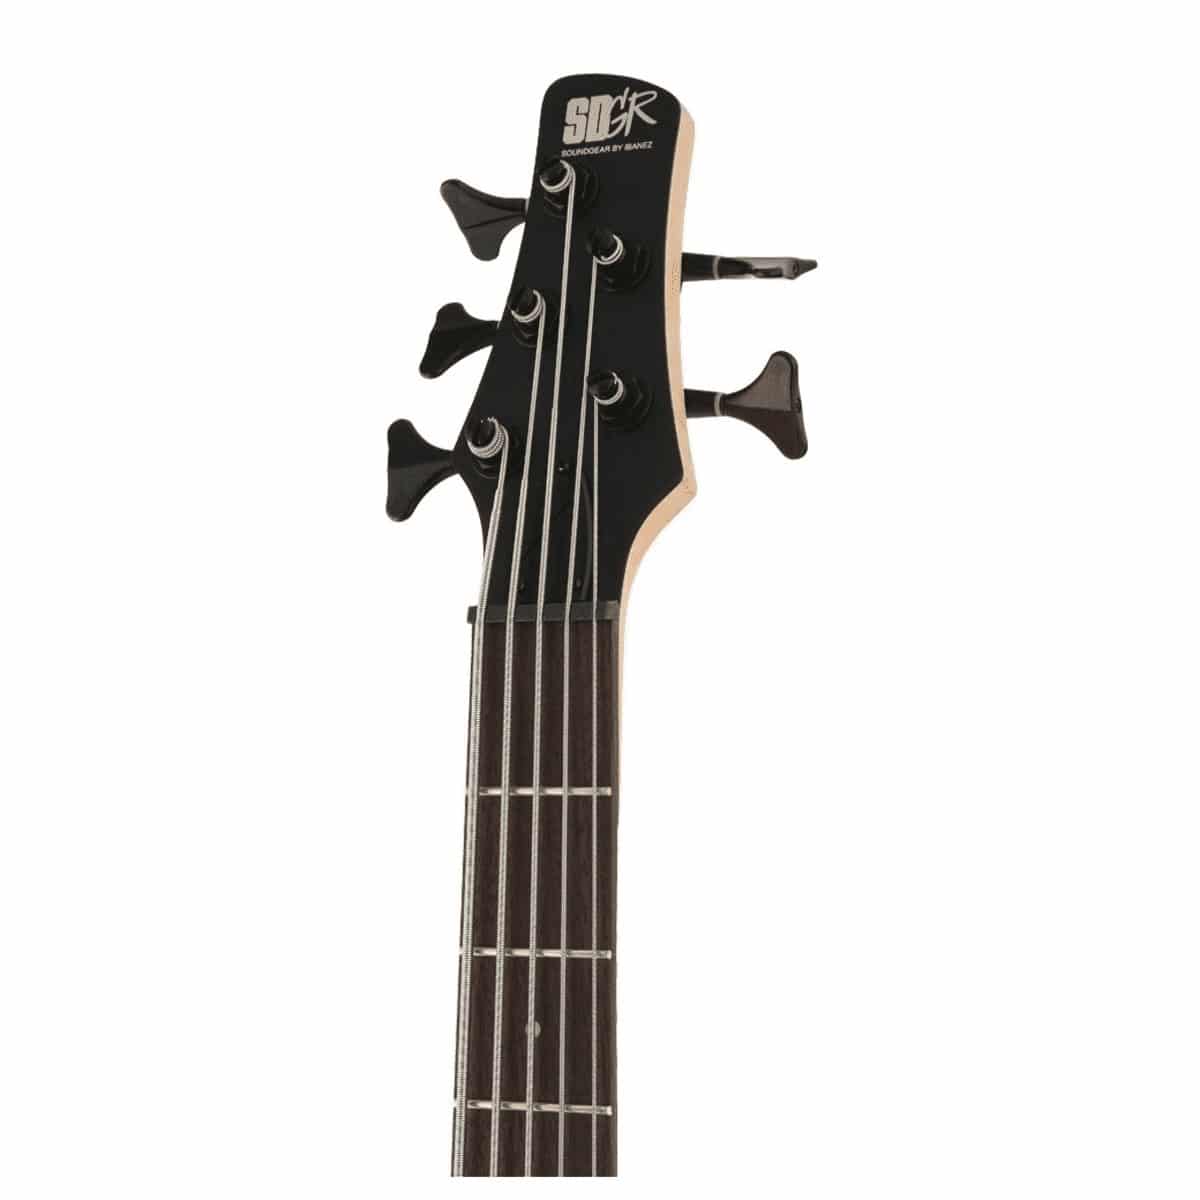 Ibanez SR305EB Weathered Black bass guitar